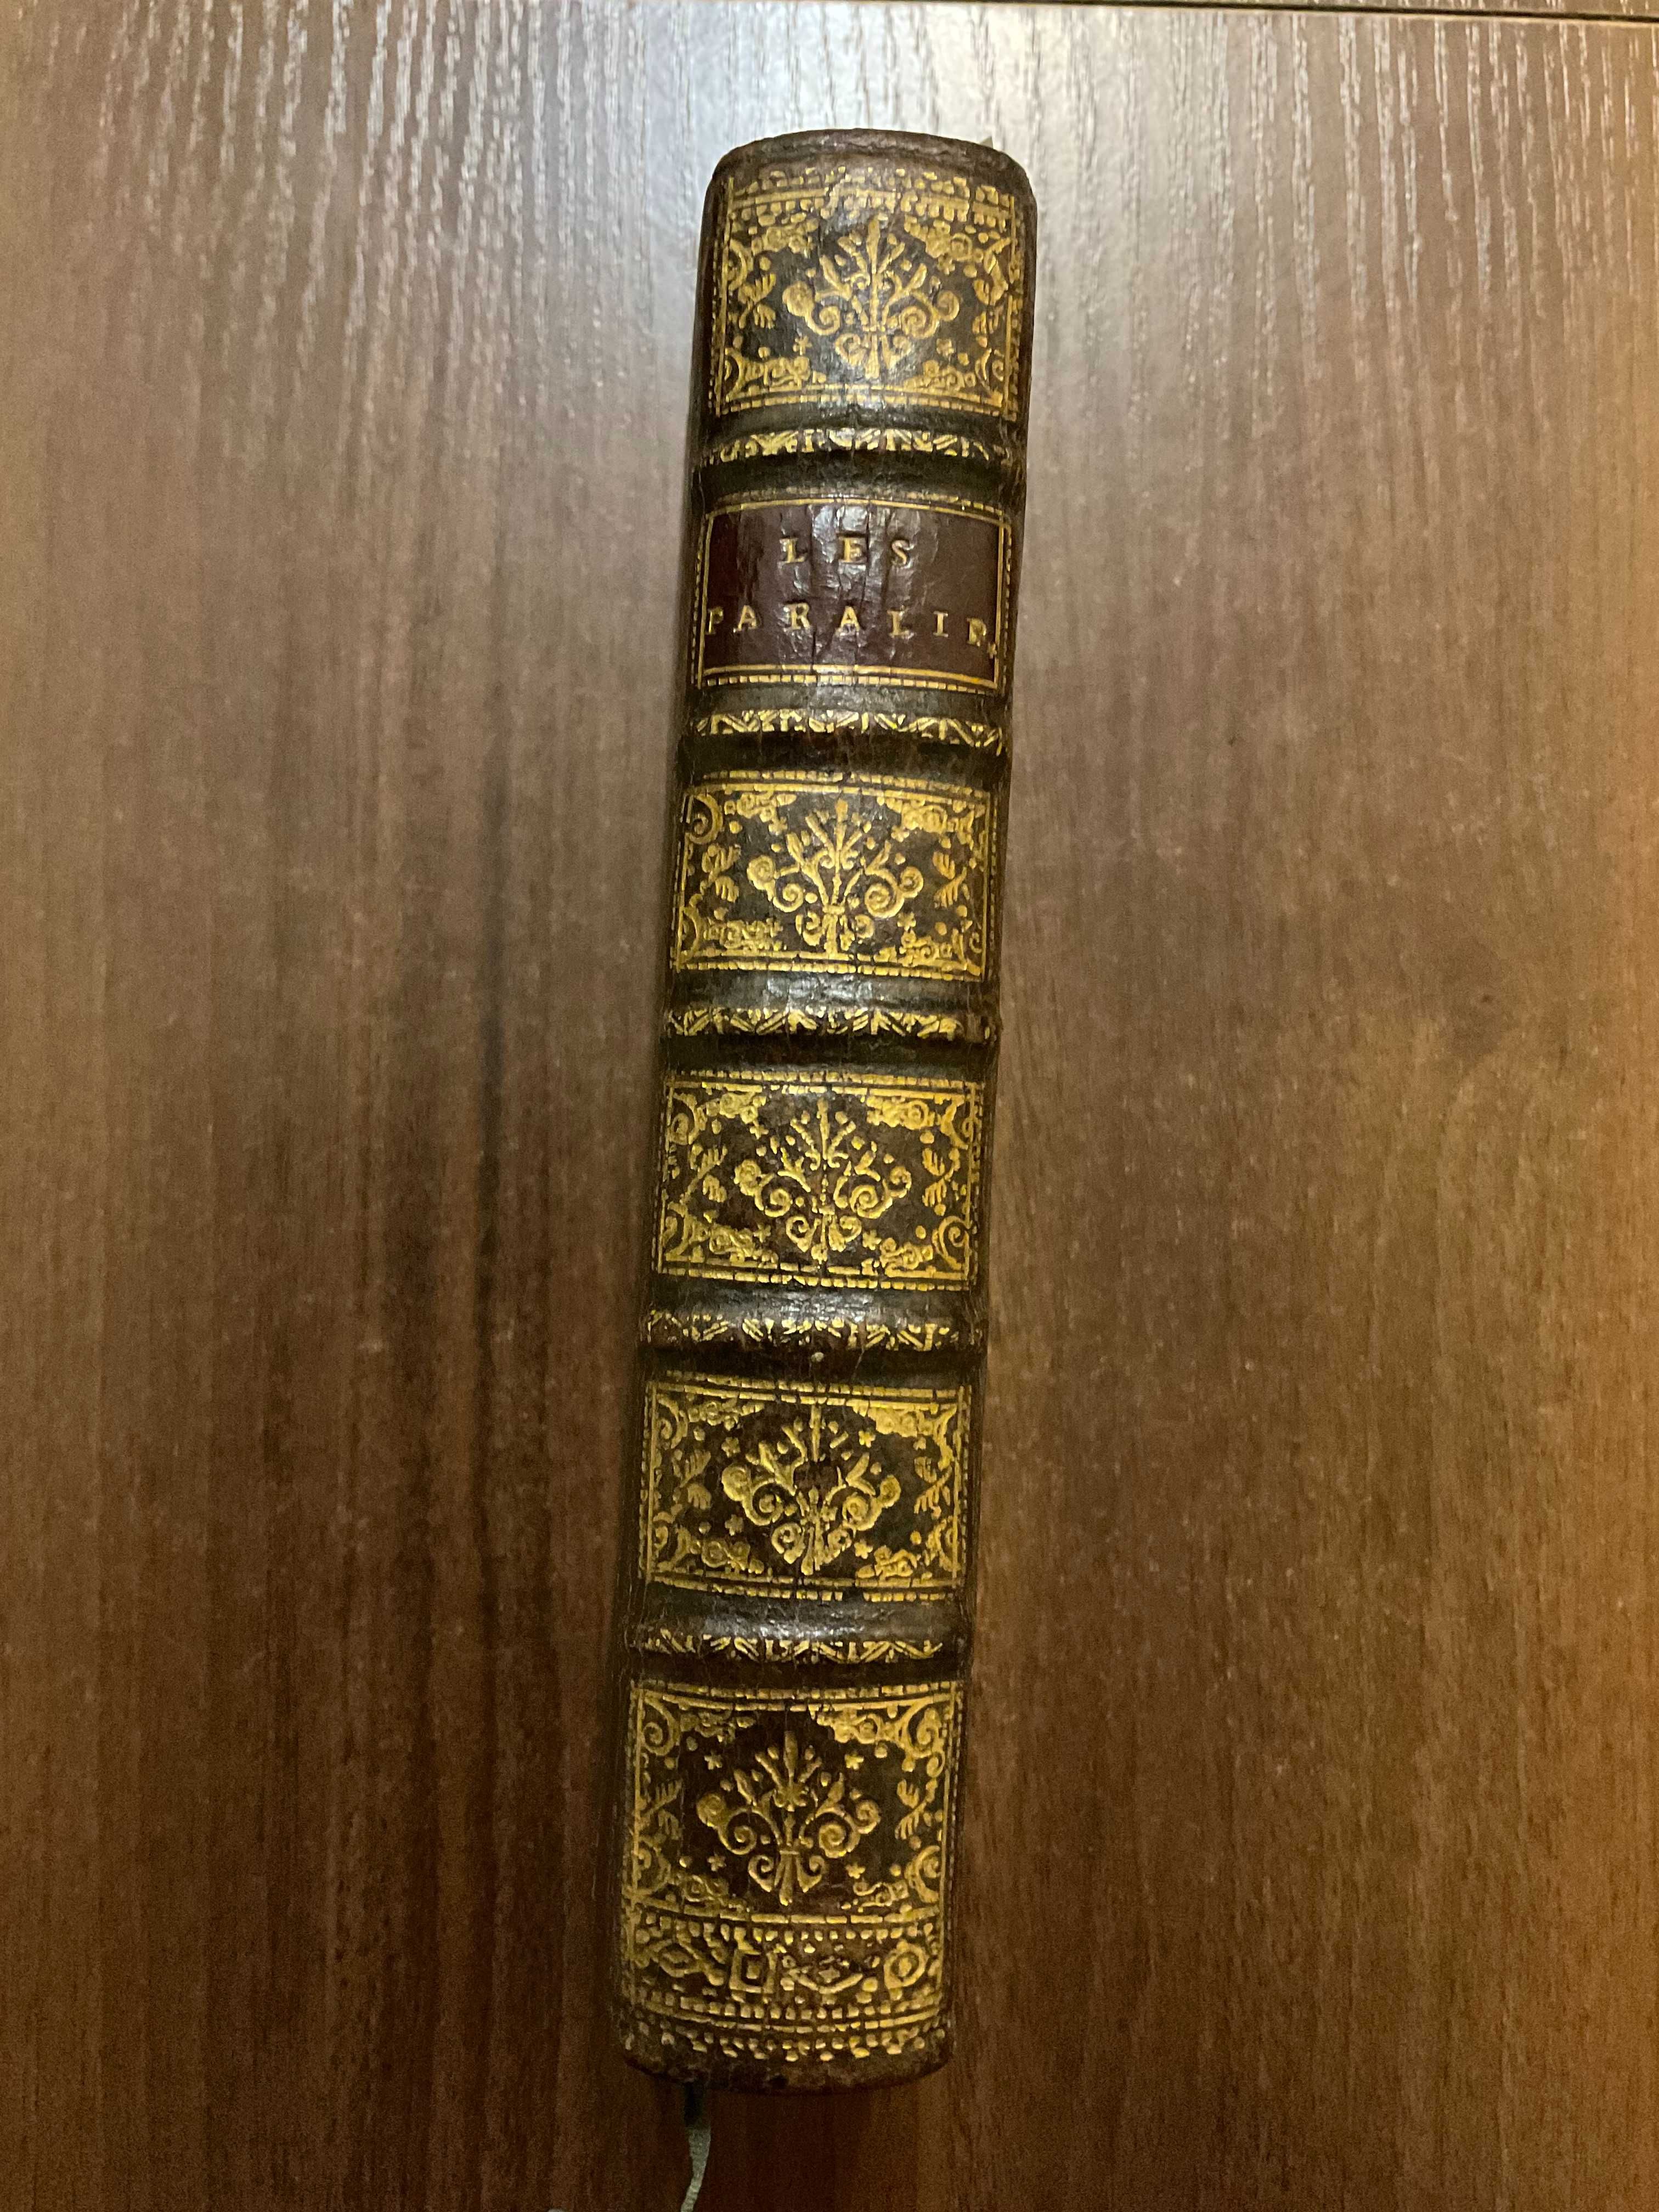 1698 Paralipomenes Старий Завіт латинь французька Стародрук